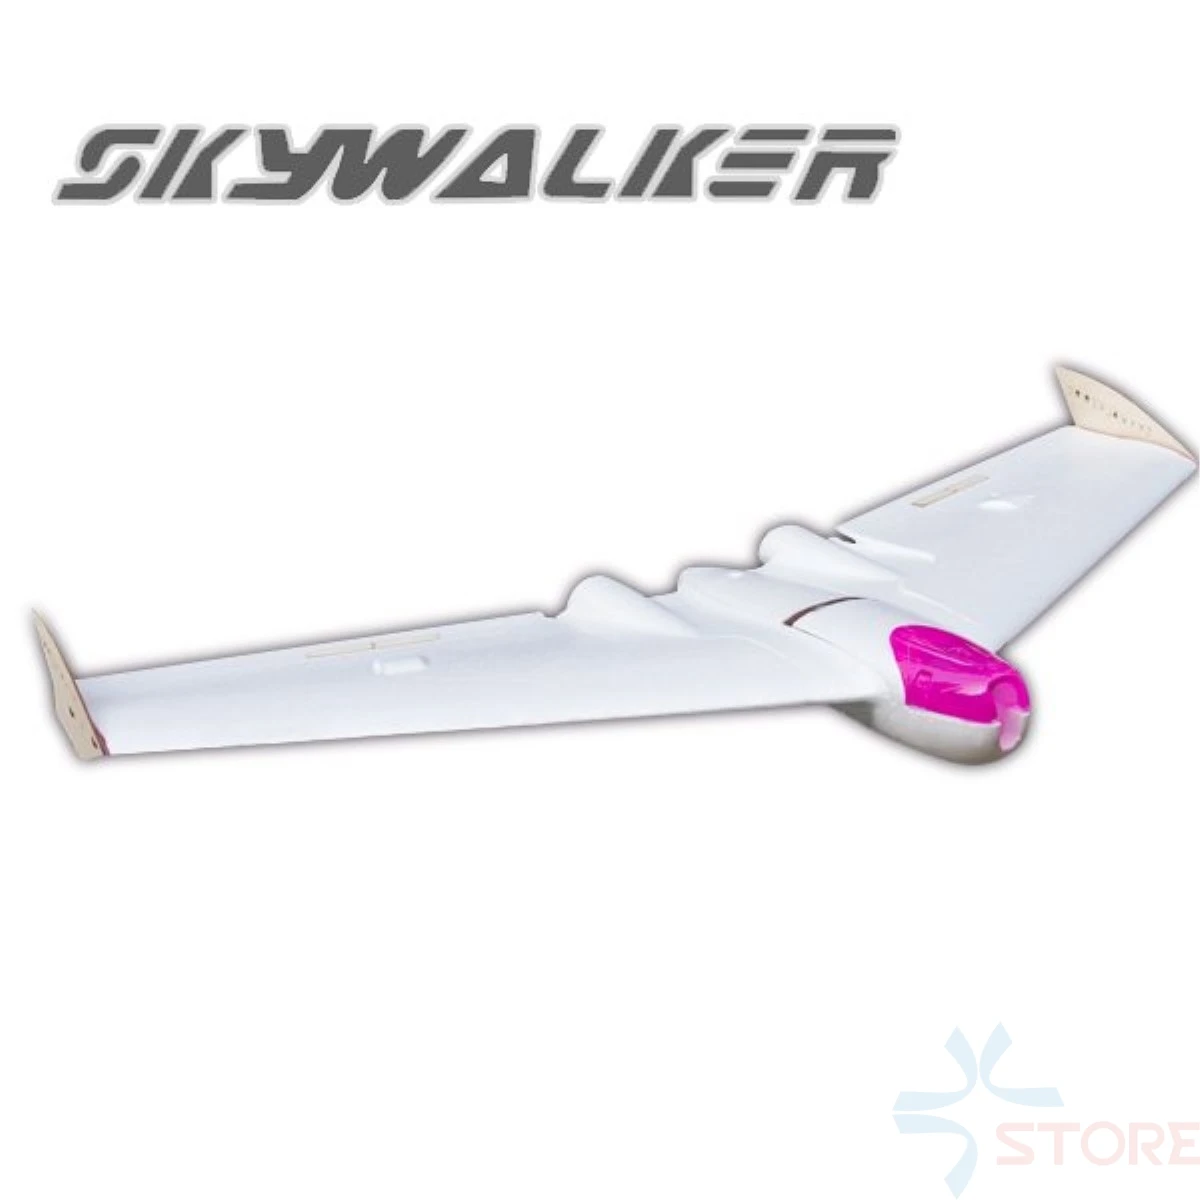 Skywalker SMART 996mm Wingspan EPO Flying Wing For FPV Racing or Long Range Flying RC Airplane Kit 4